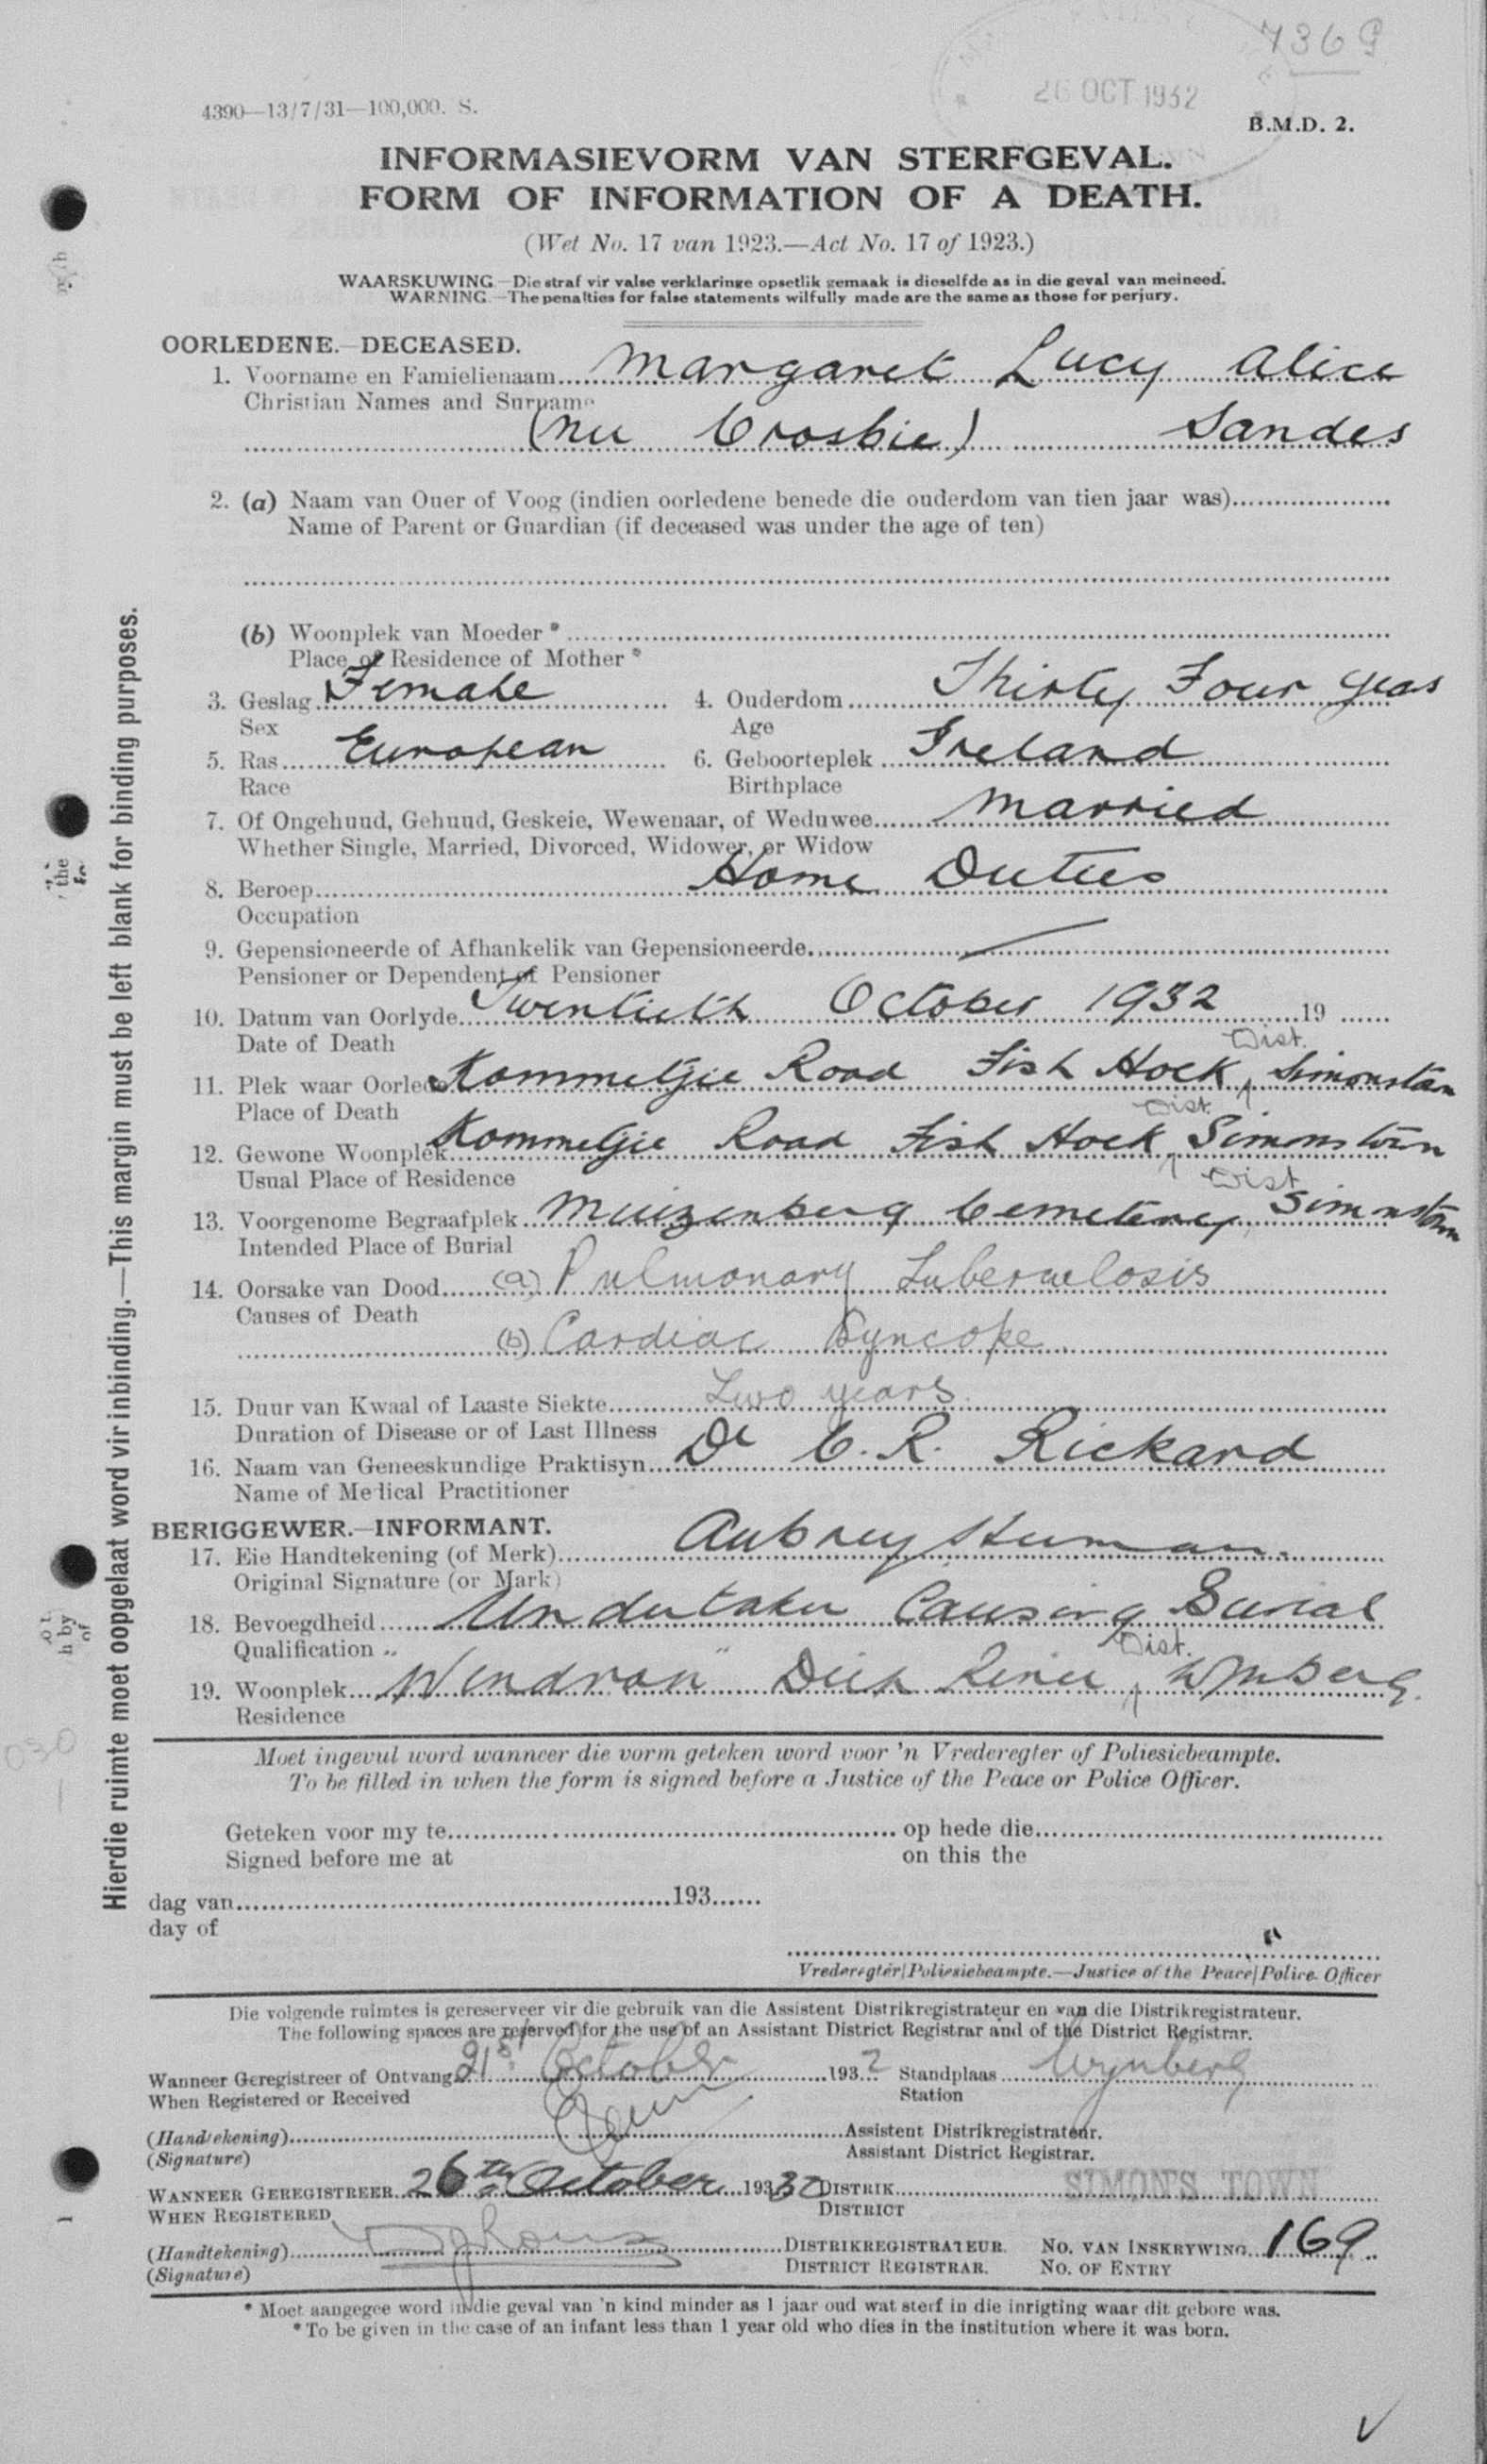 Death certificate of Margaret Lucy Alice Crosbie